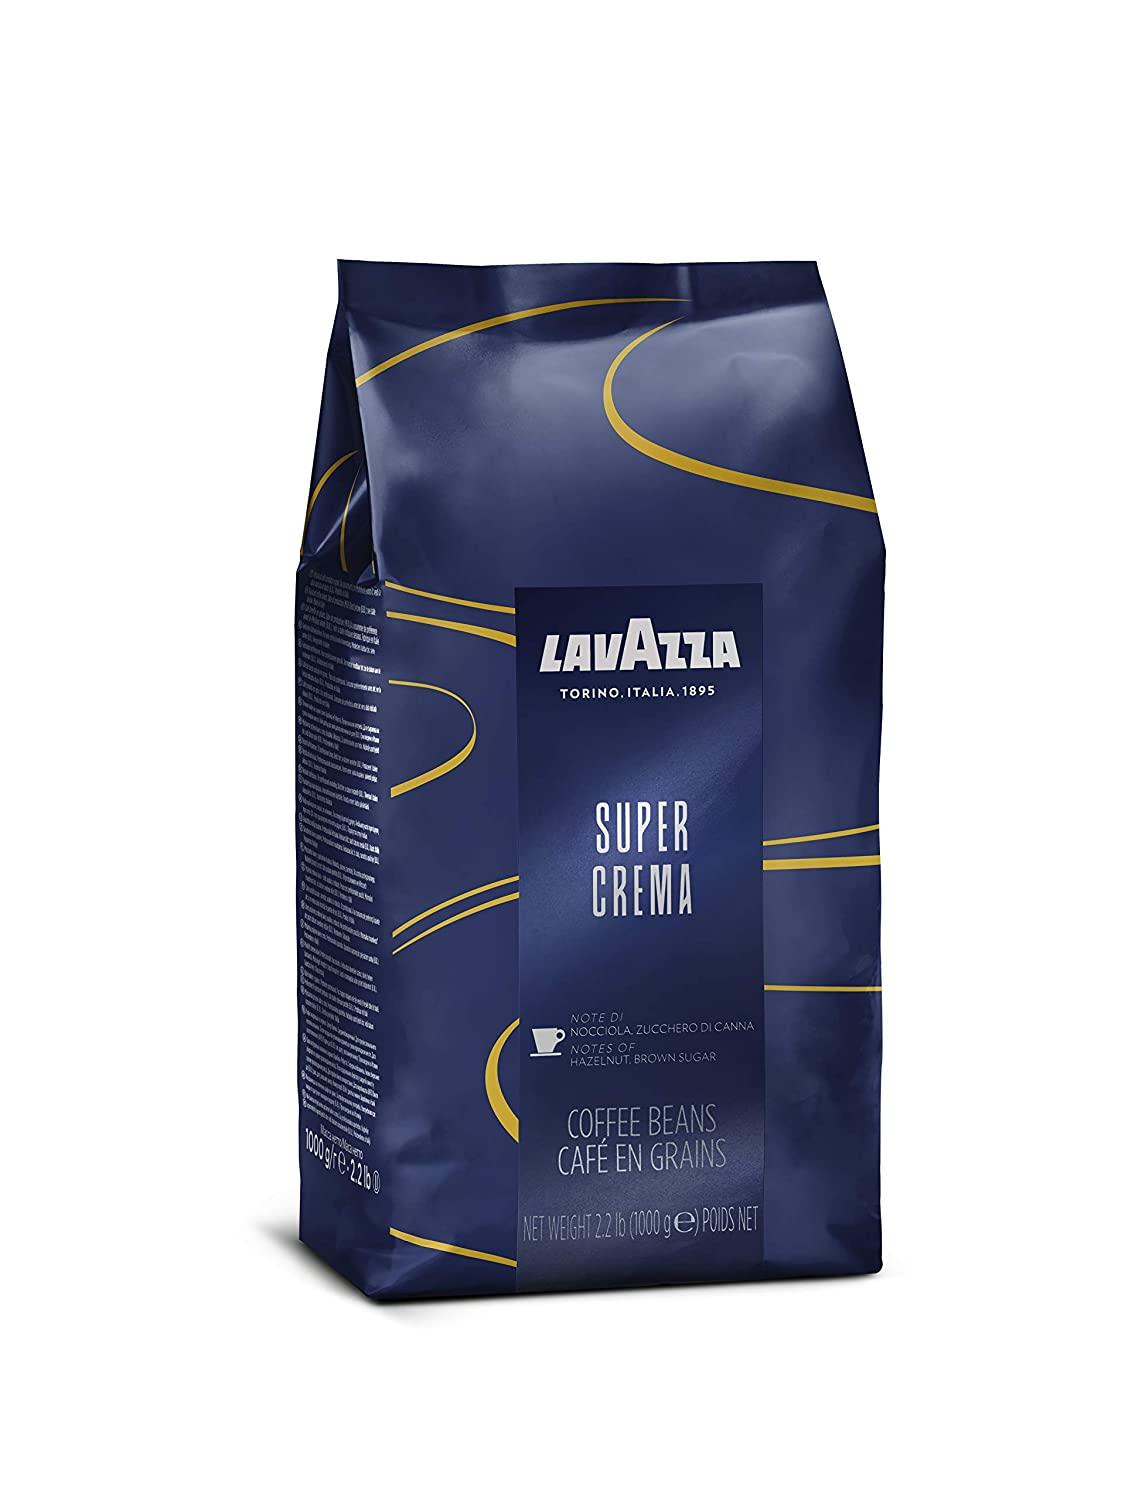 Lavazza Super Crema Whole Bean Coffee Blend REVIEW